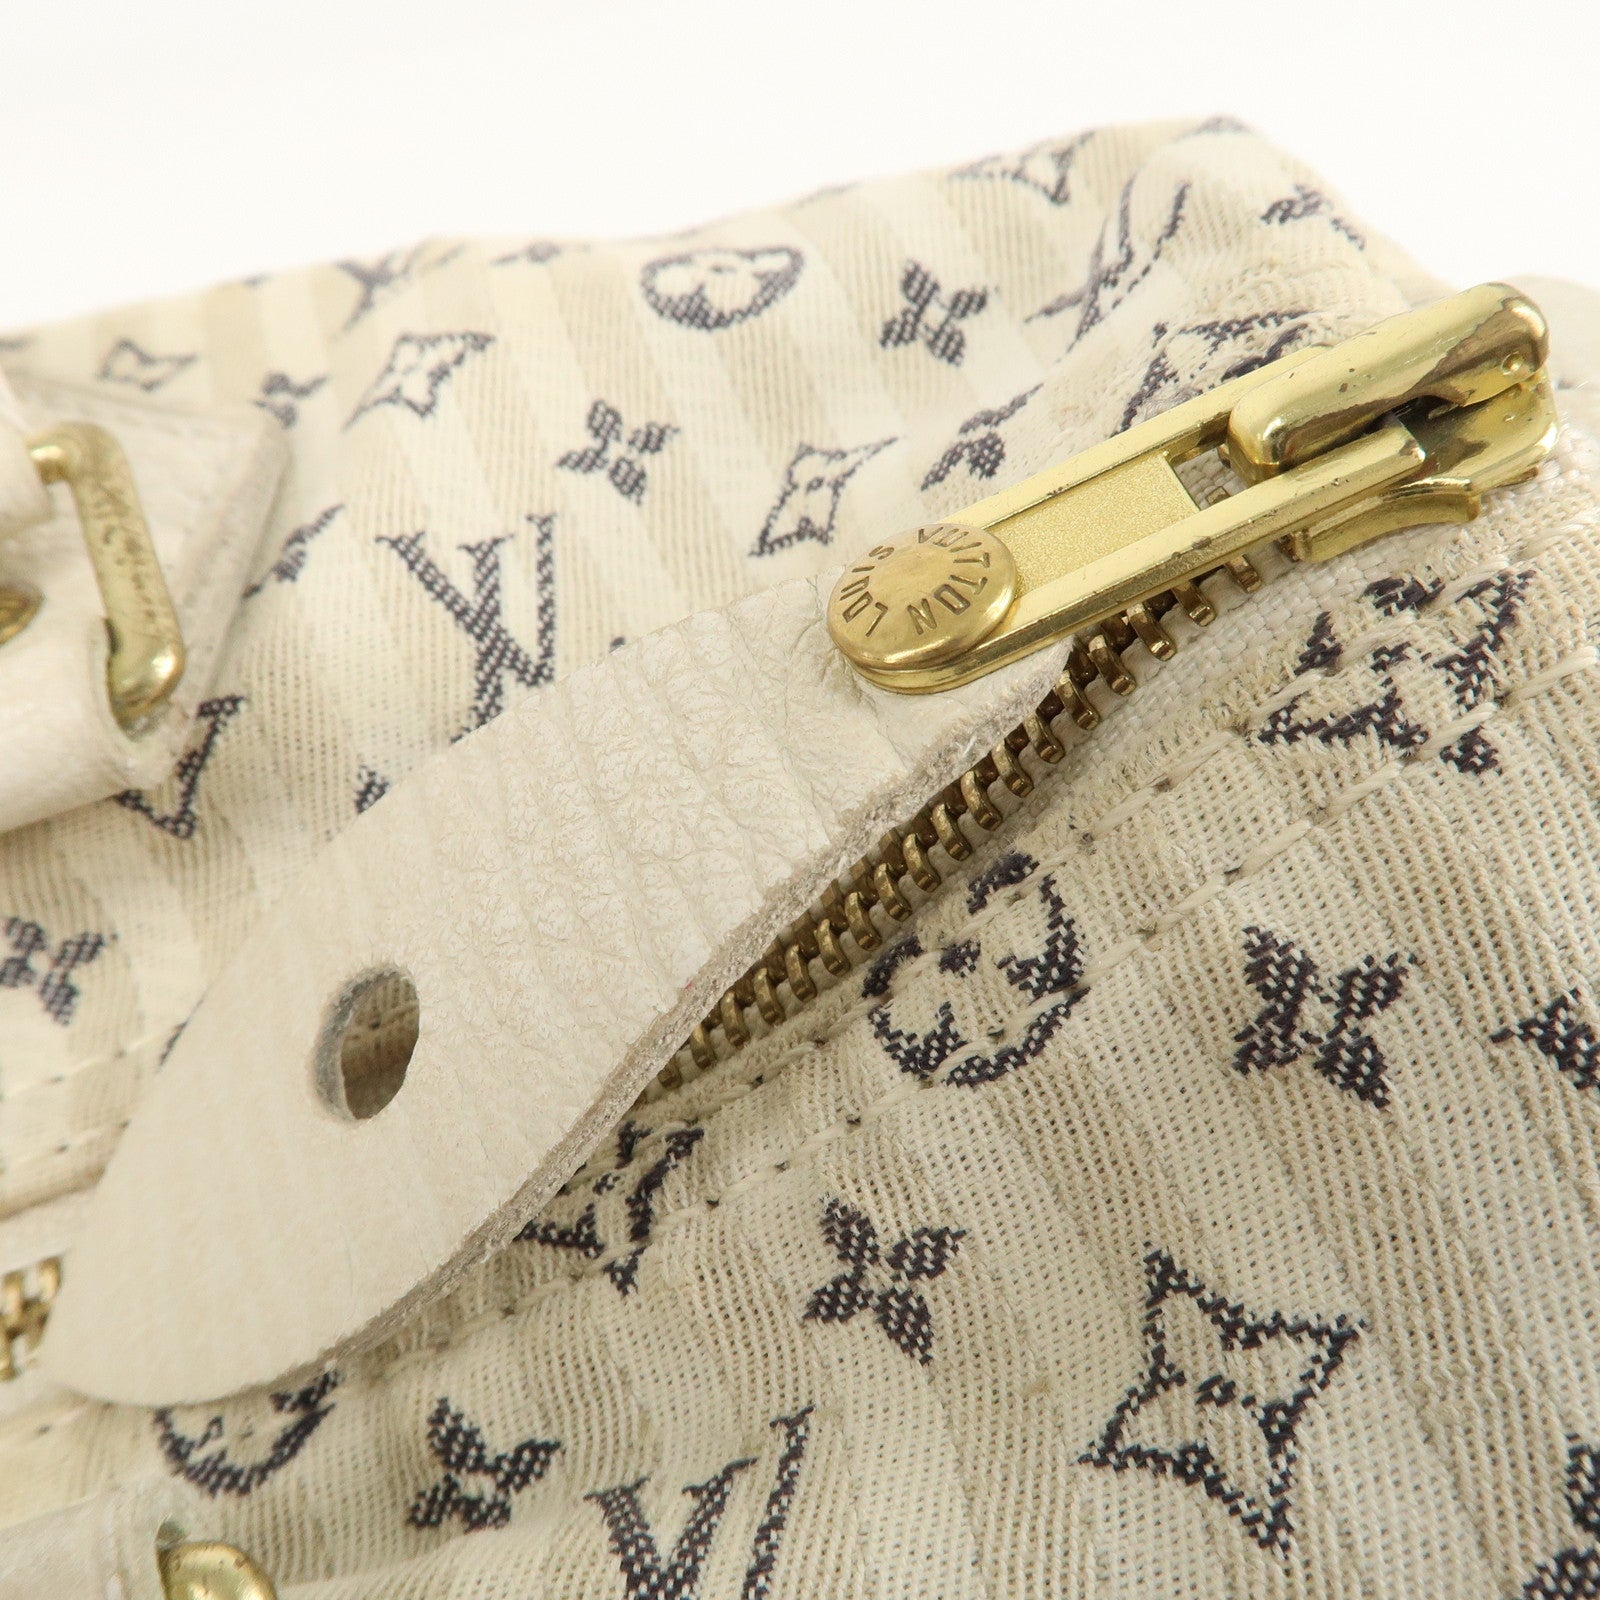 Louis-Vuitton-Monogram-Mini-Lin-Speedy-30-Hand-Bag-Croiset-M95500